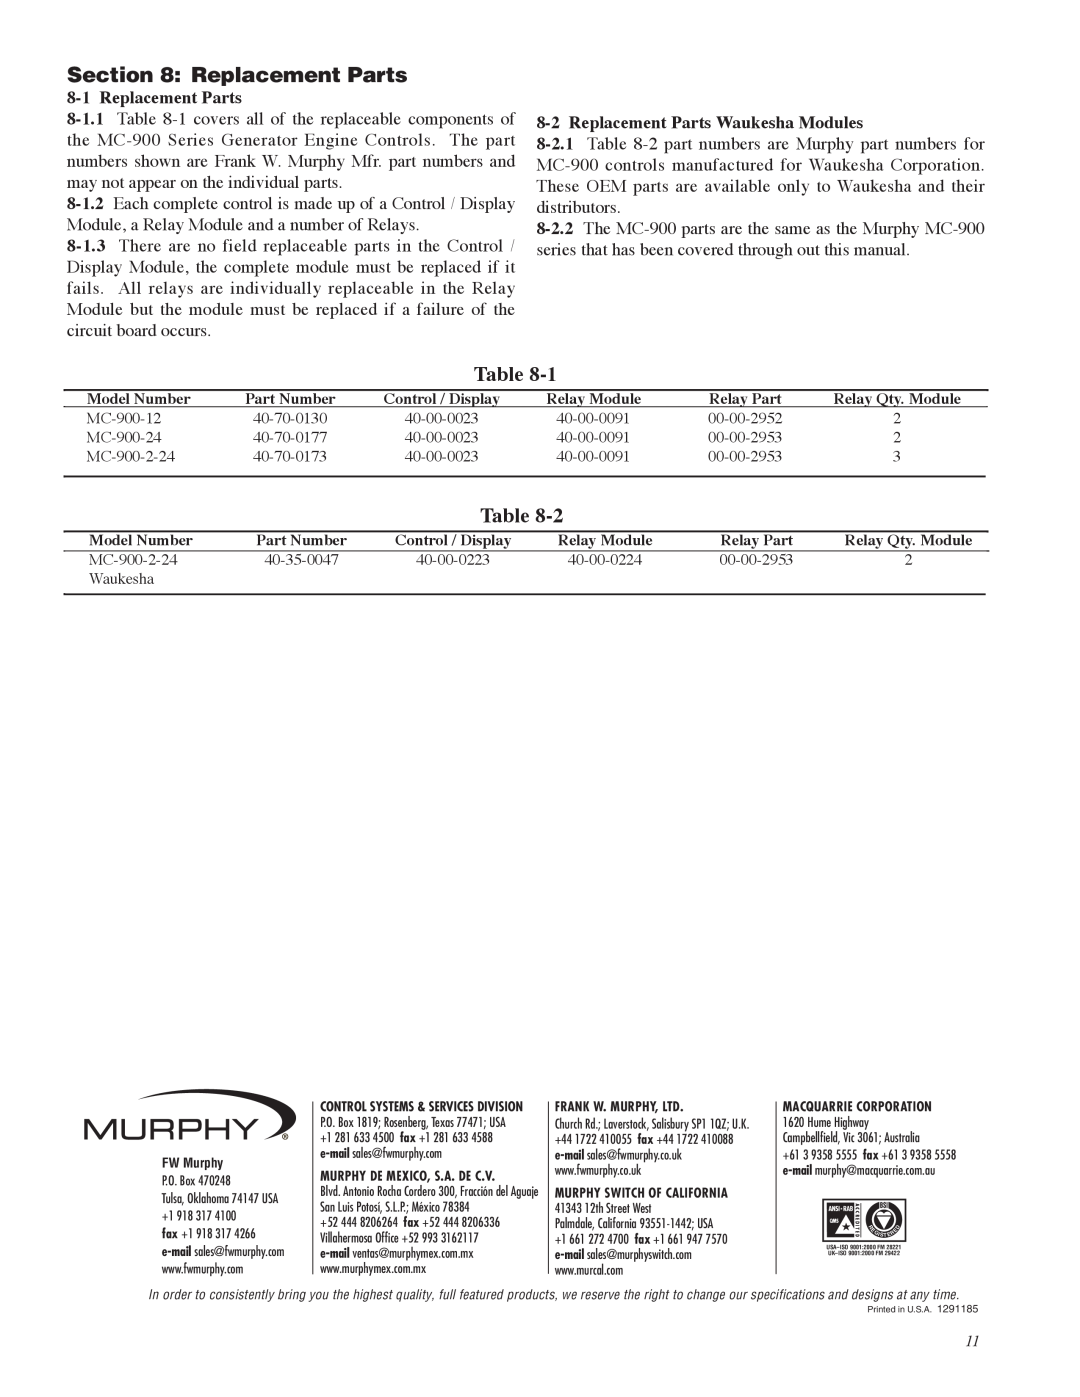 Murphy MC-900 Series manual Replacement Parts Waukesha Modules 